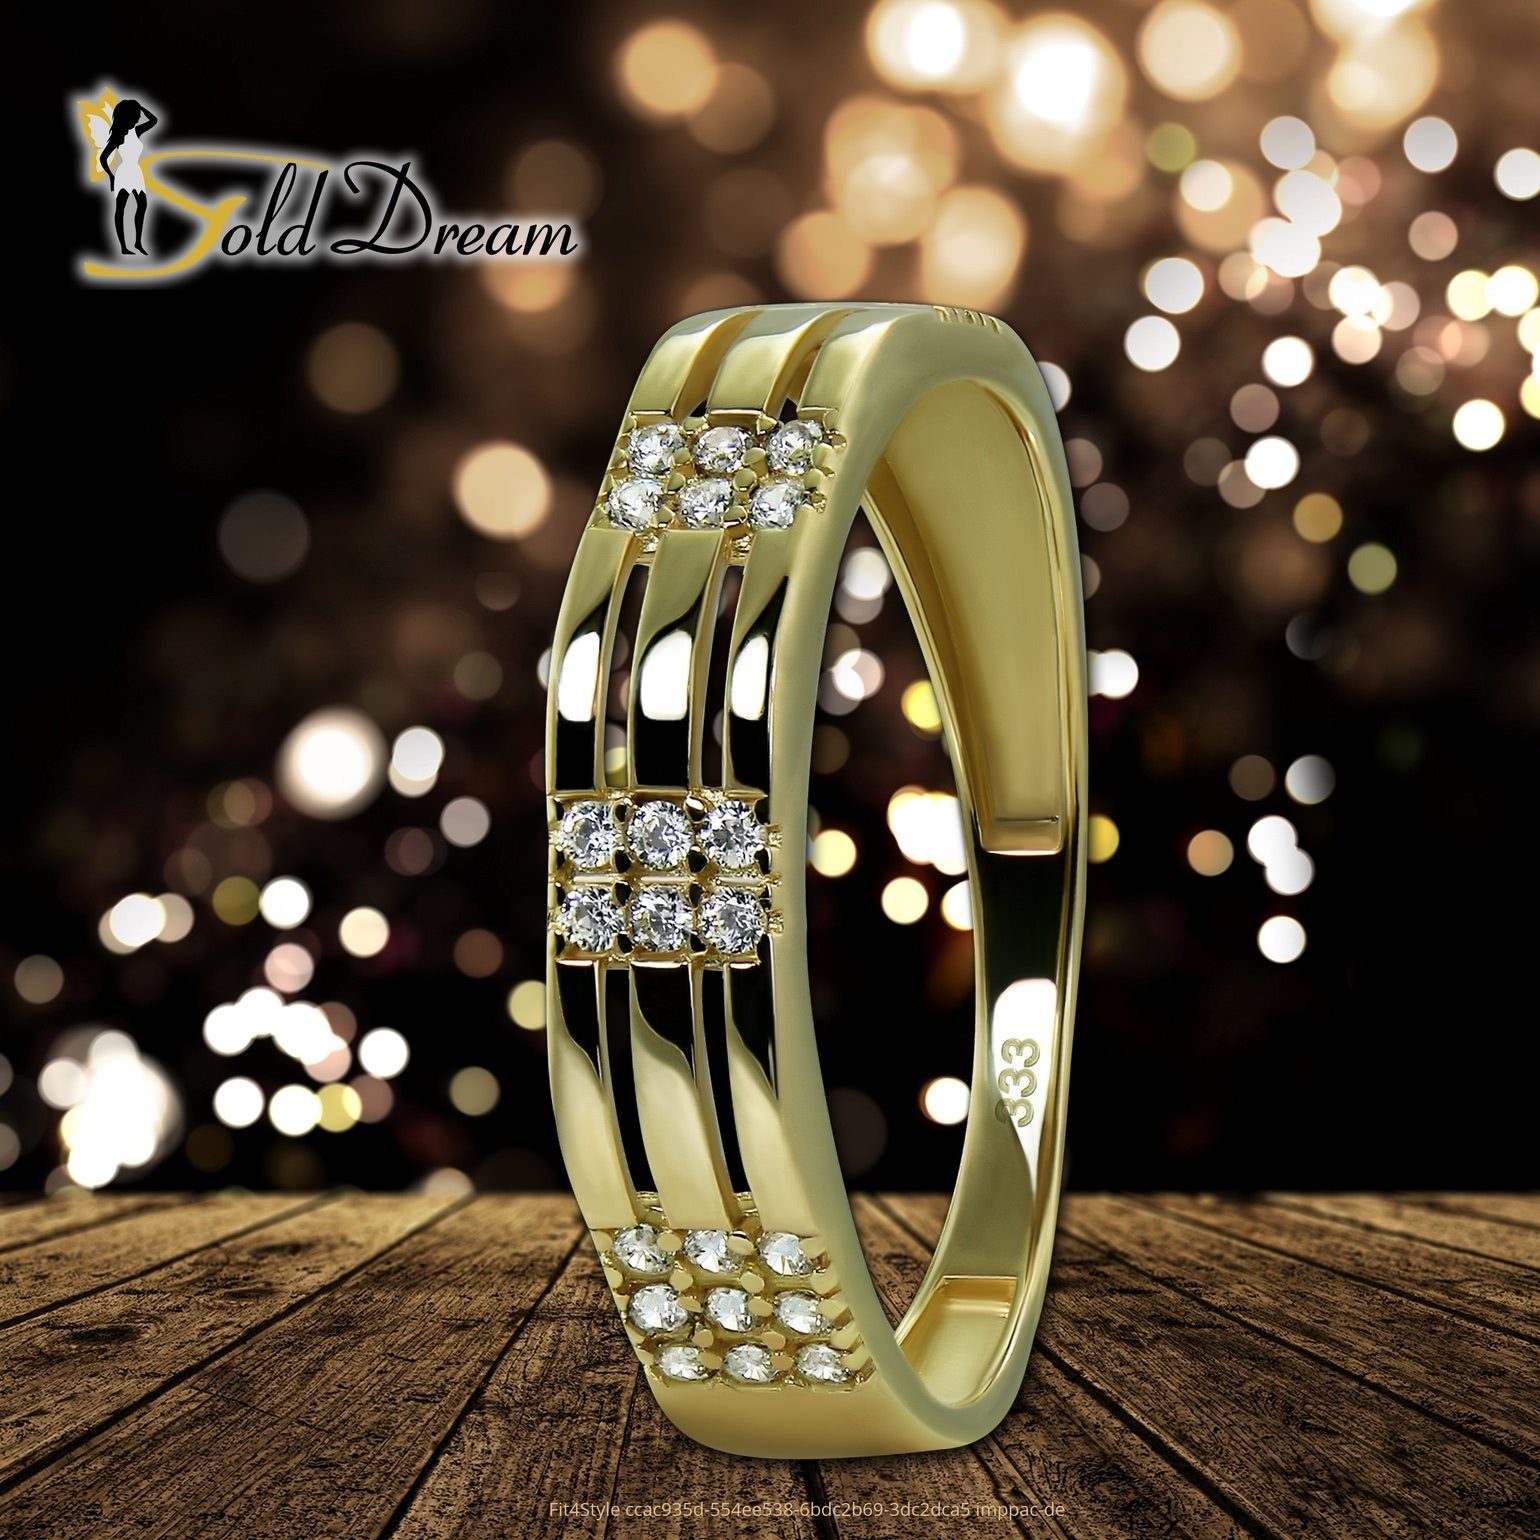 GoldDream Goldring GoldDream Sparkle 8 Farbe: Ring 333 Gold weiß (Fingerring), Sparkle - gold, Damen Karat, Gr.58 Ring Gelbgold